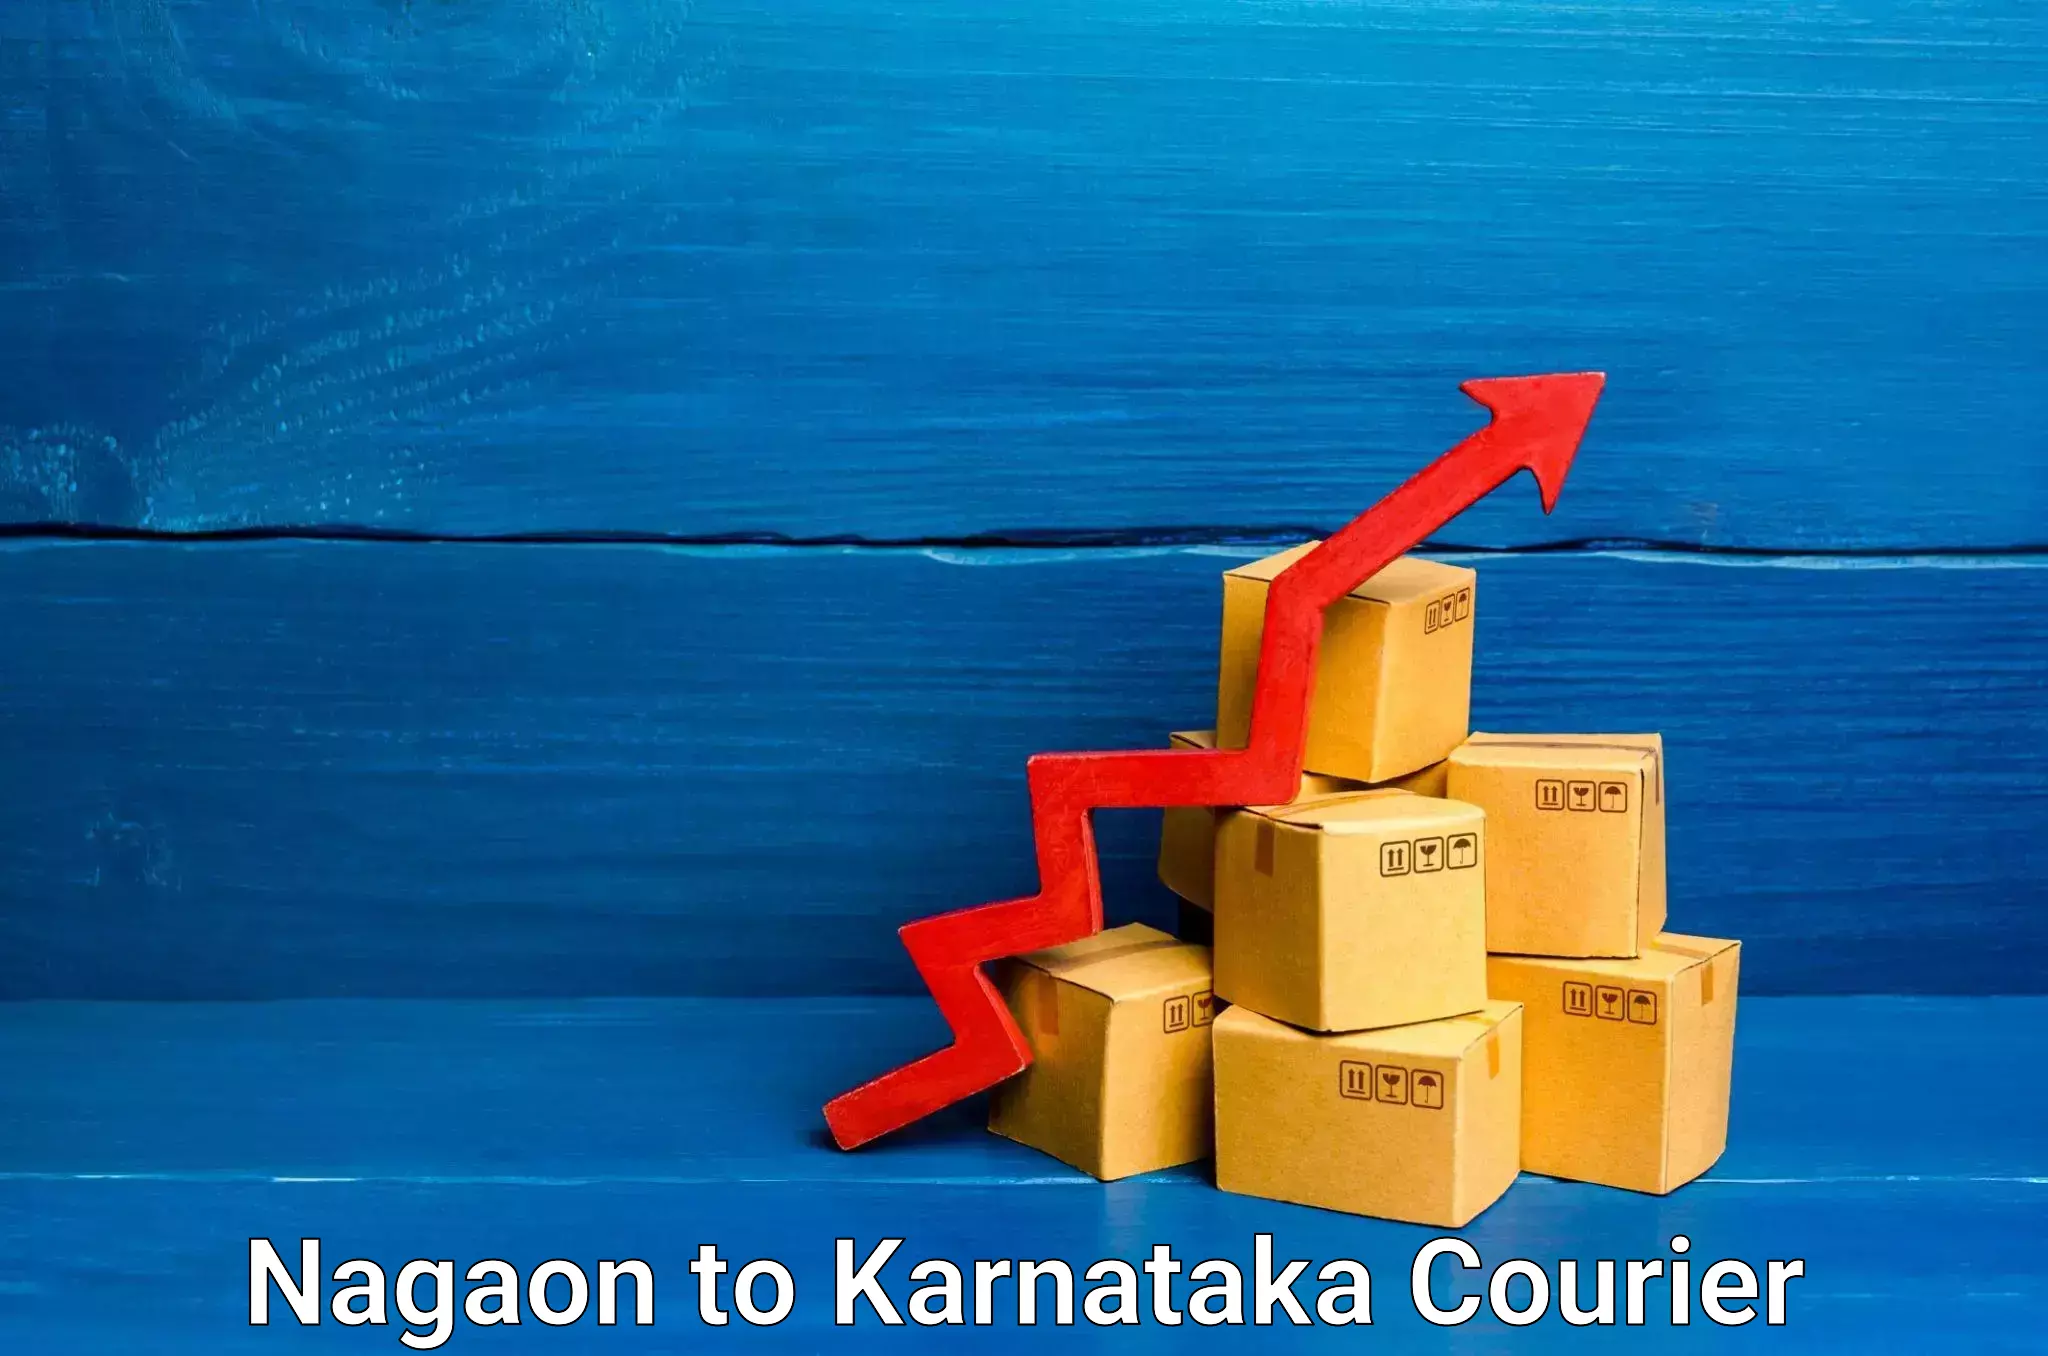 International courier networks Nagaon to Karnataka